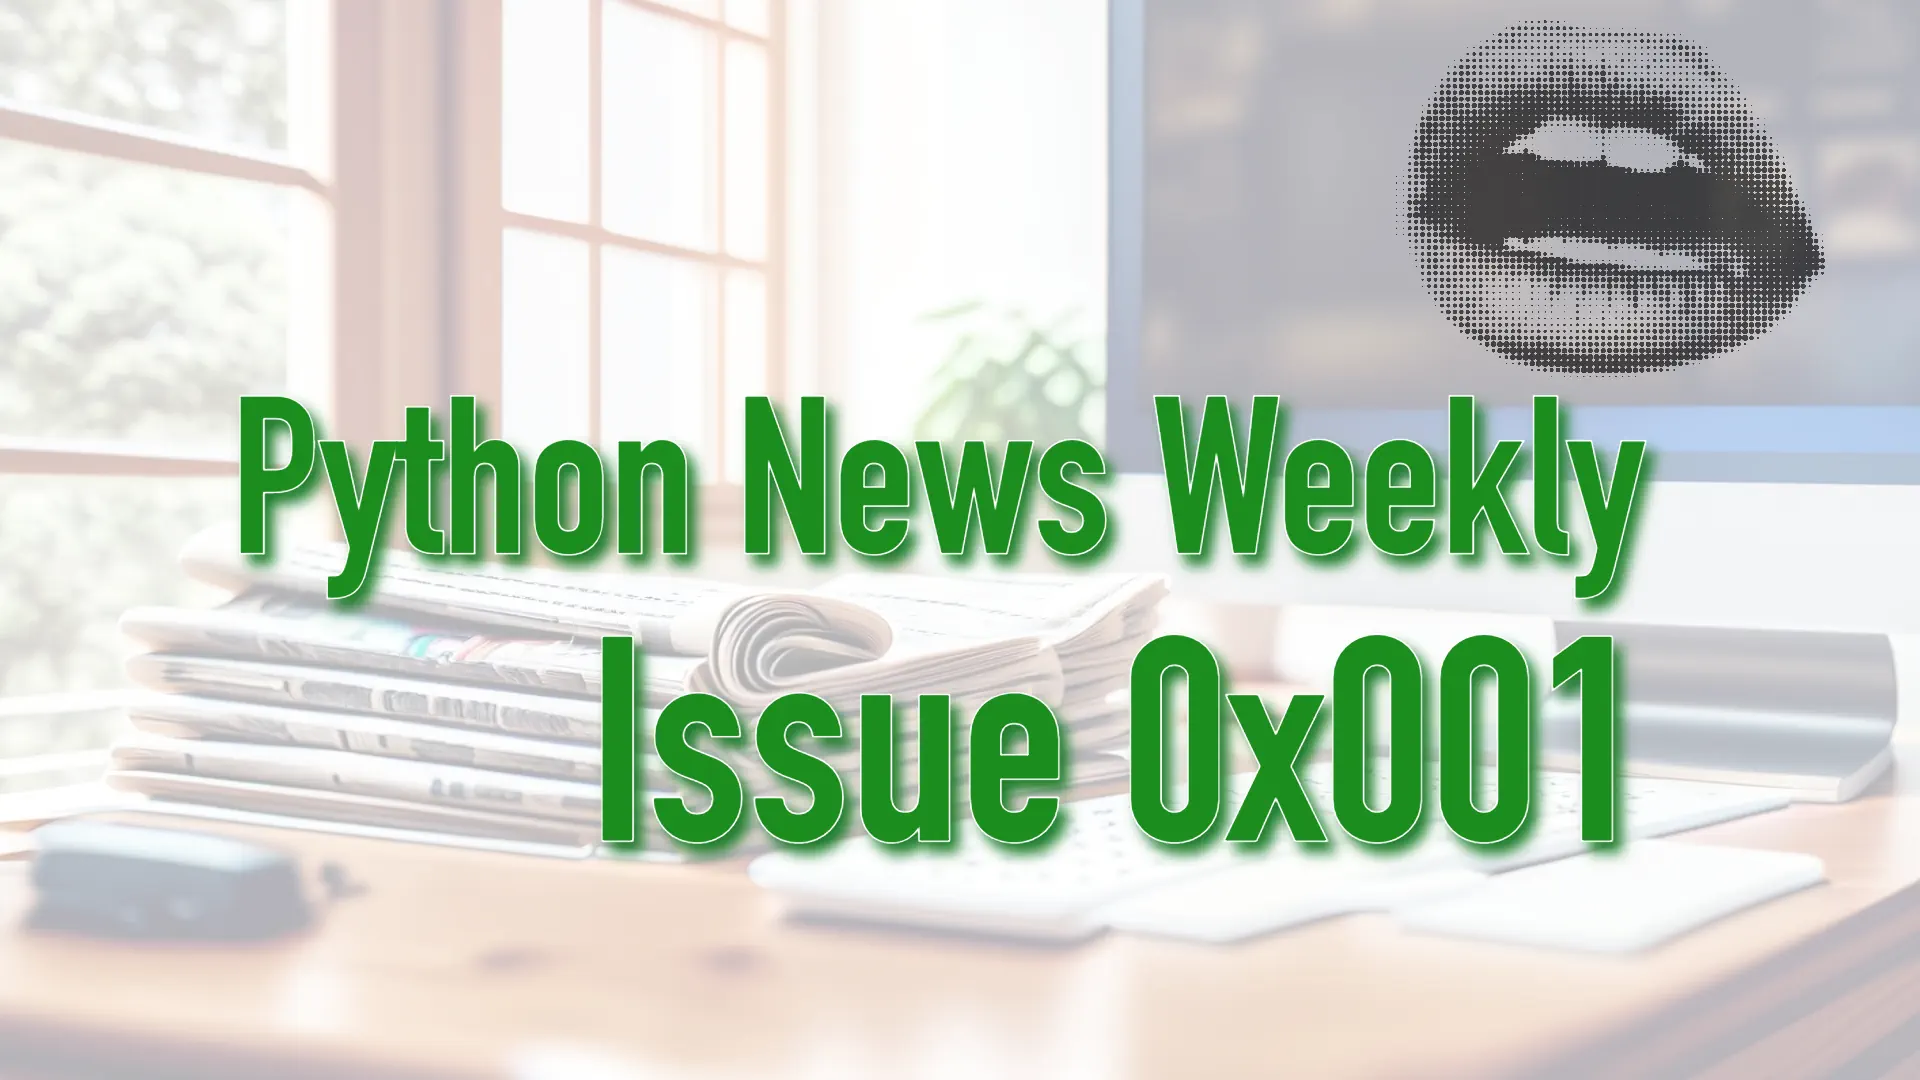 /news/weekly/0x001/python-weekly-newsletter-0x001.webp